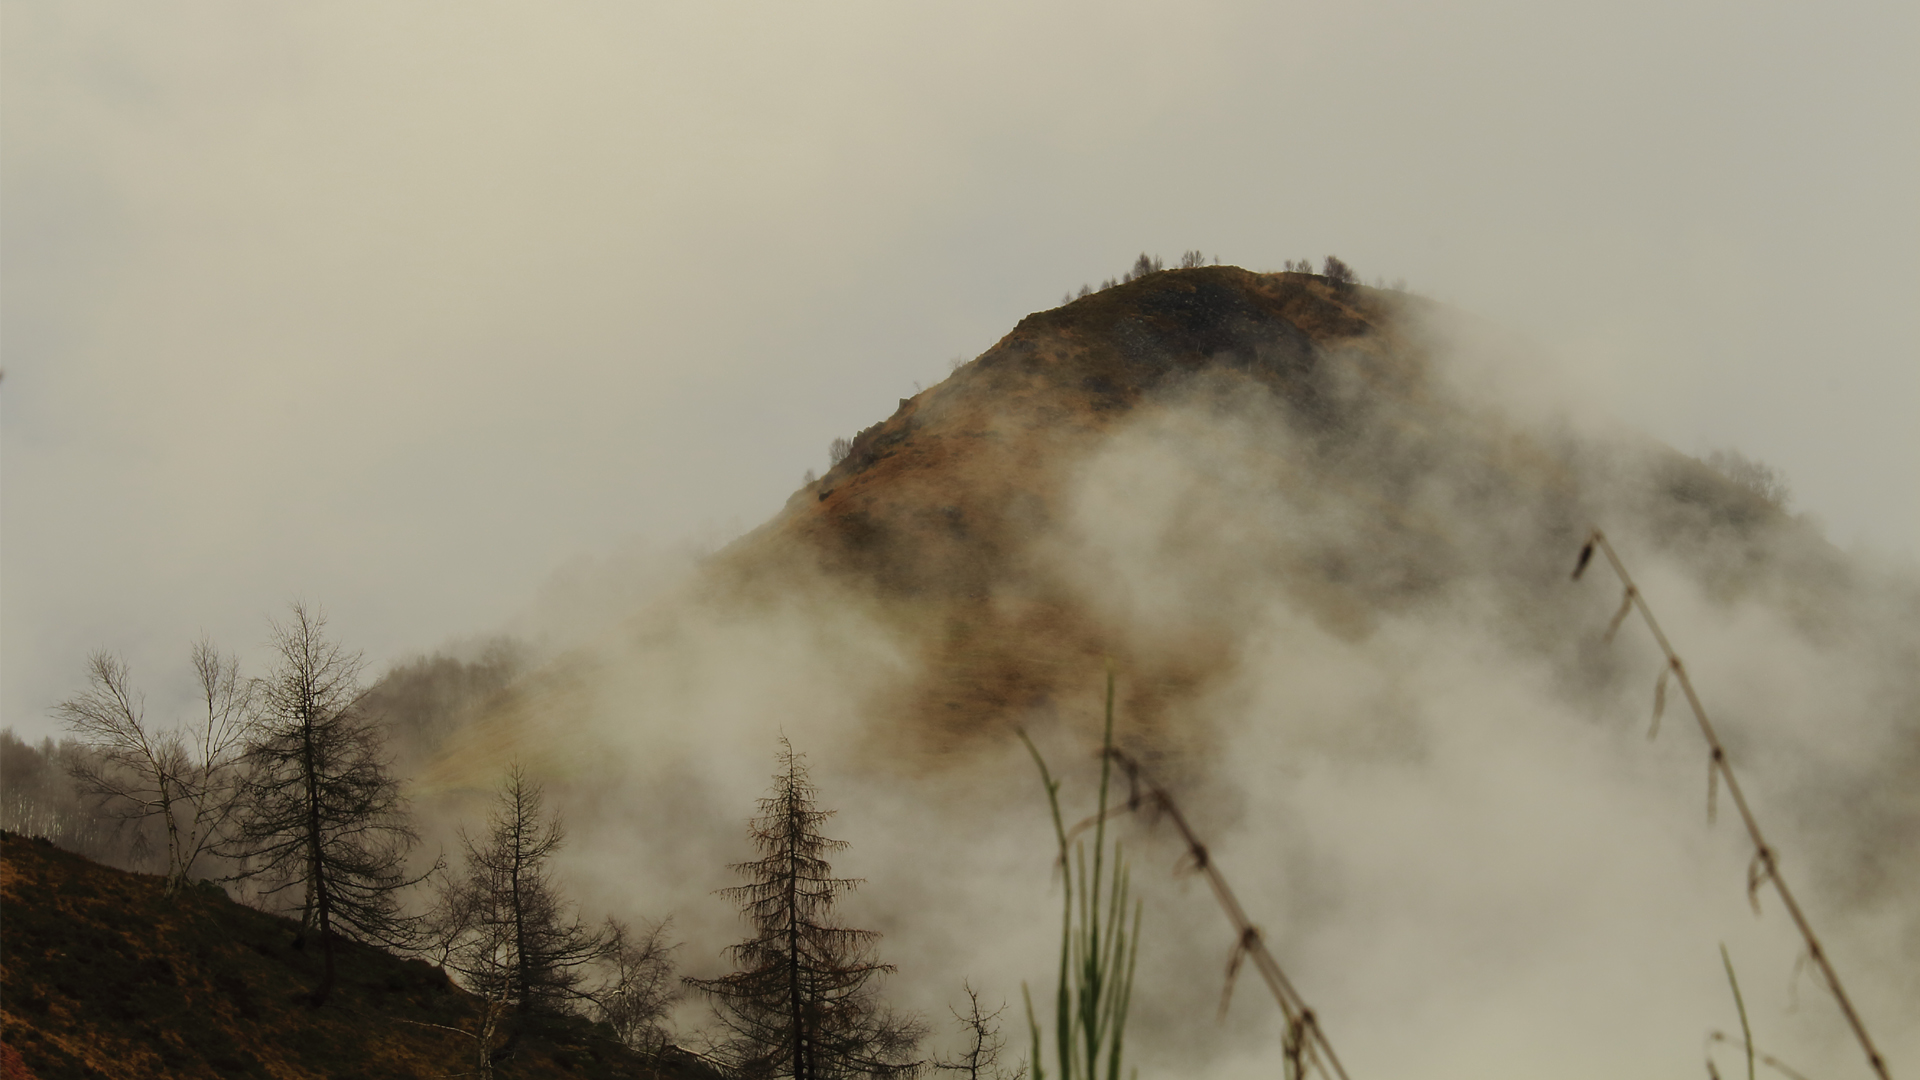 The hill behind the fog di Stefano Trabucco